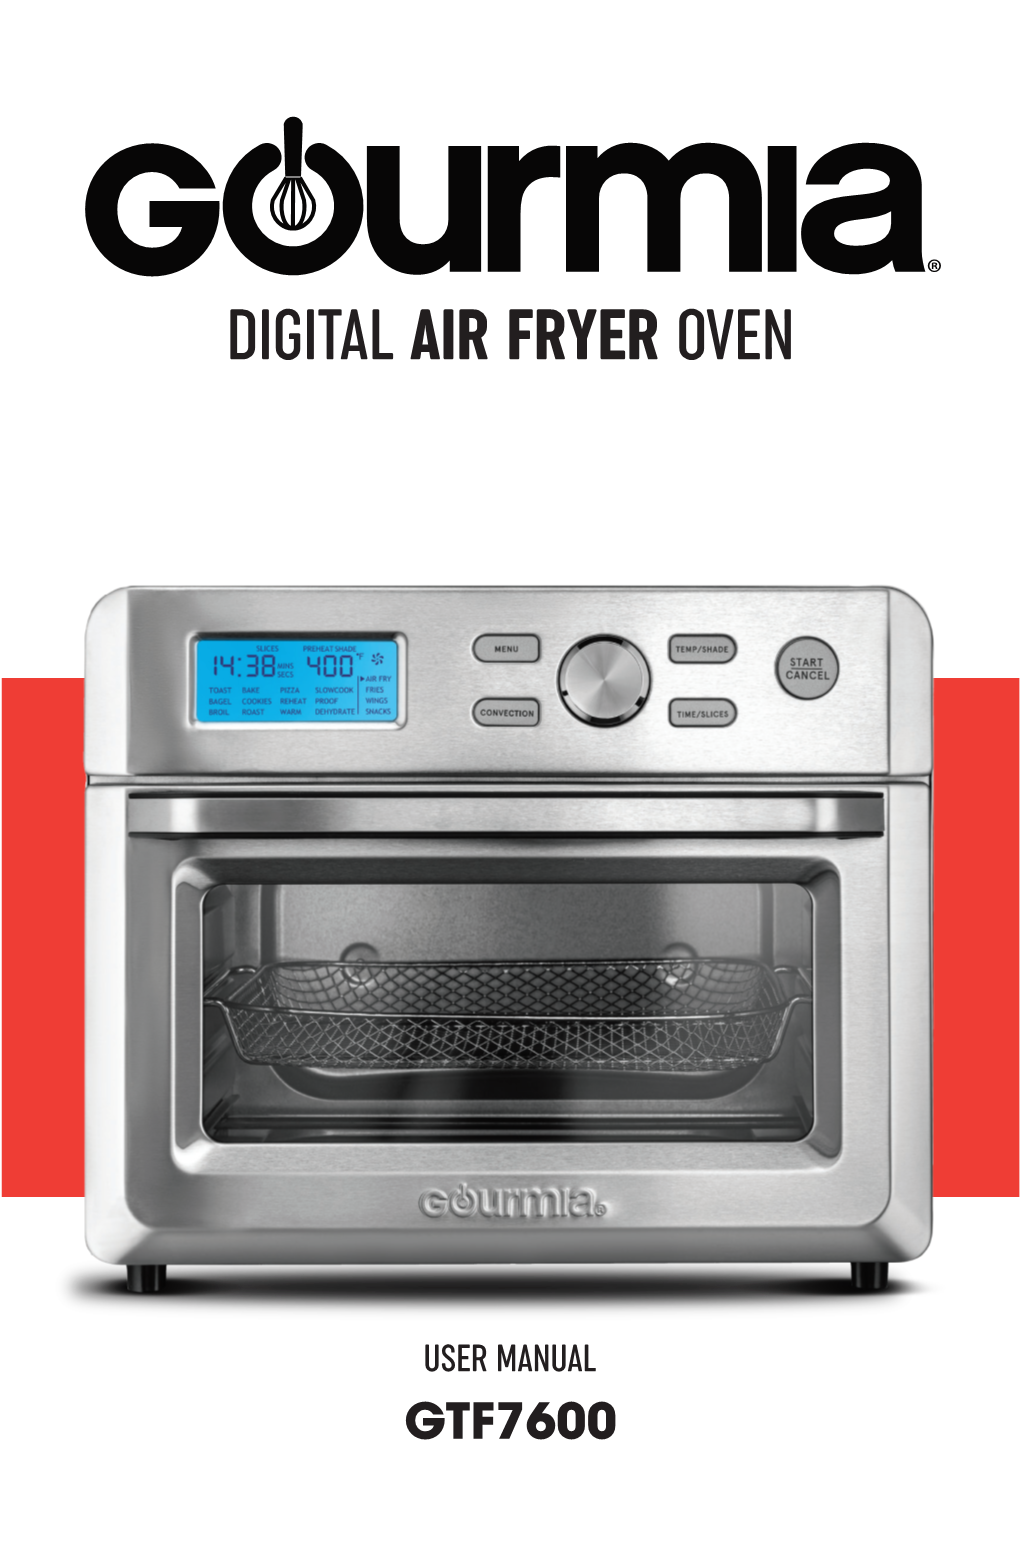 Digital Air Fryer Oven